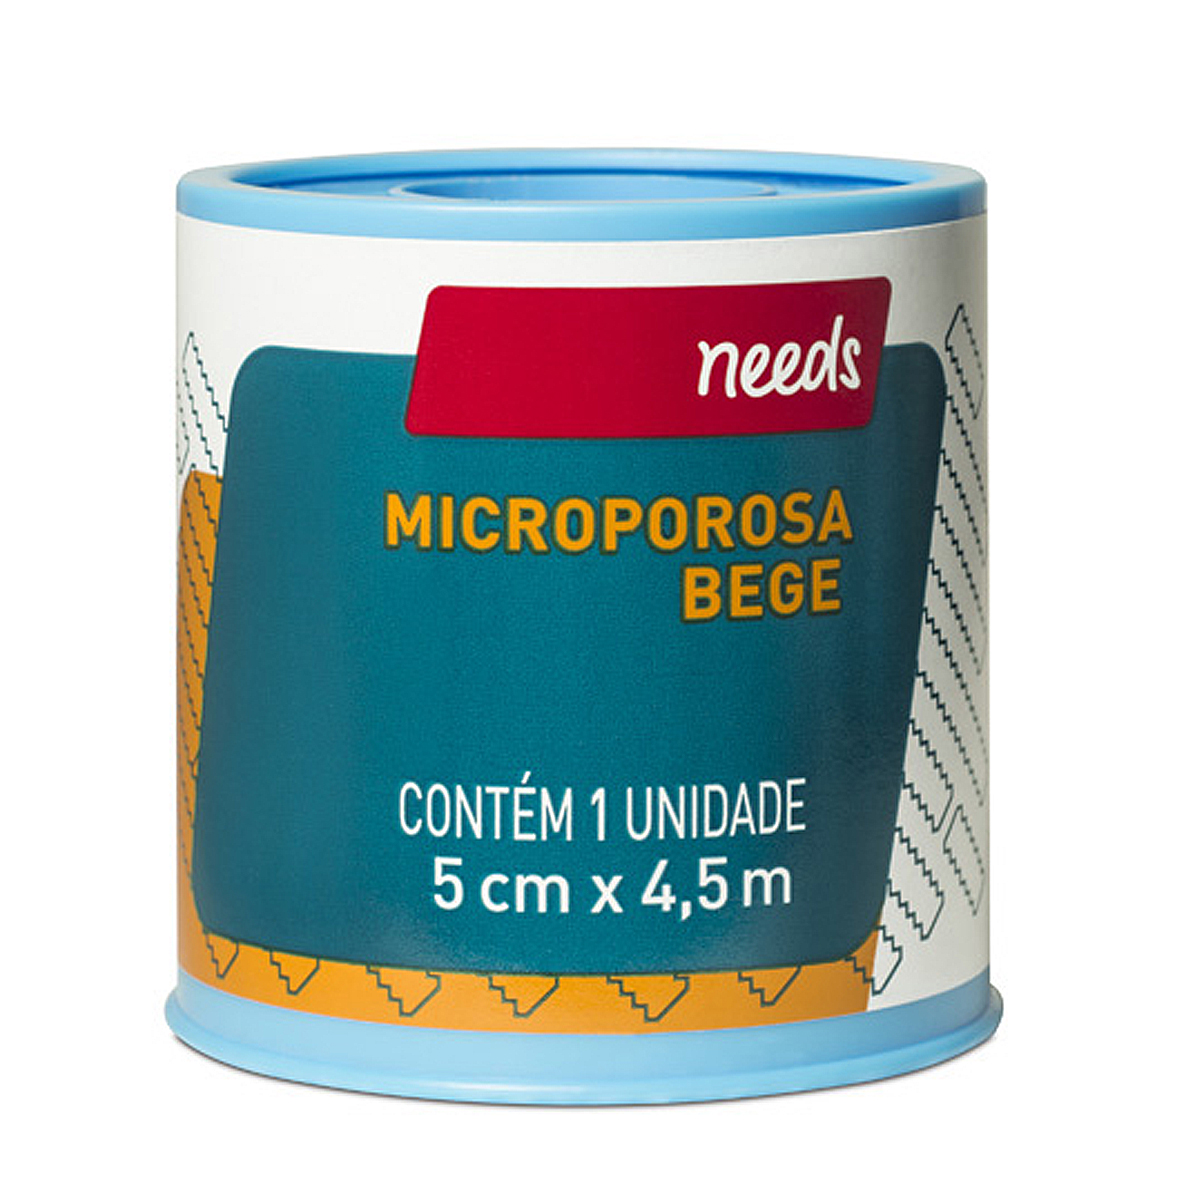 Esparadrapo Microporoso Bege Needs 5cm X 4,5m 1 Unidade